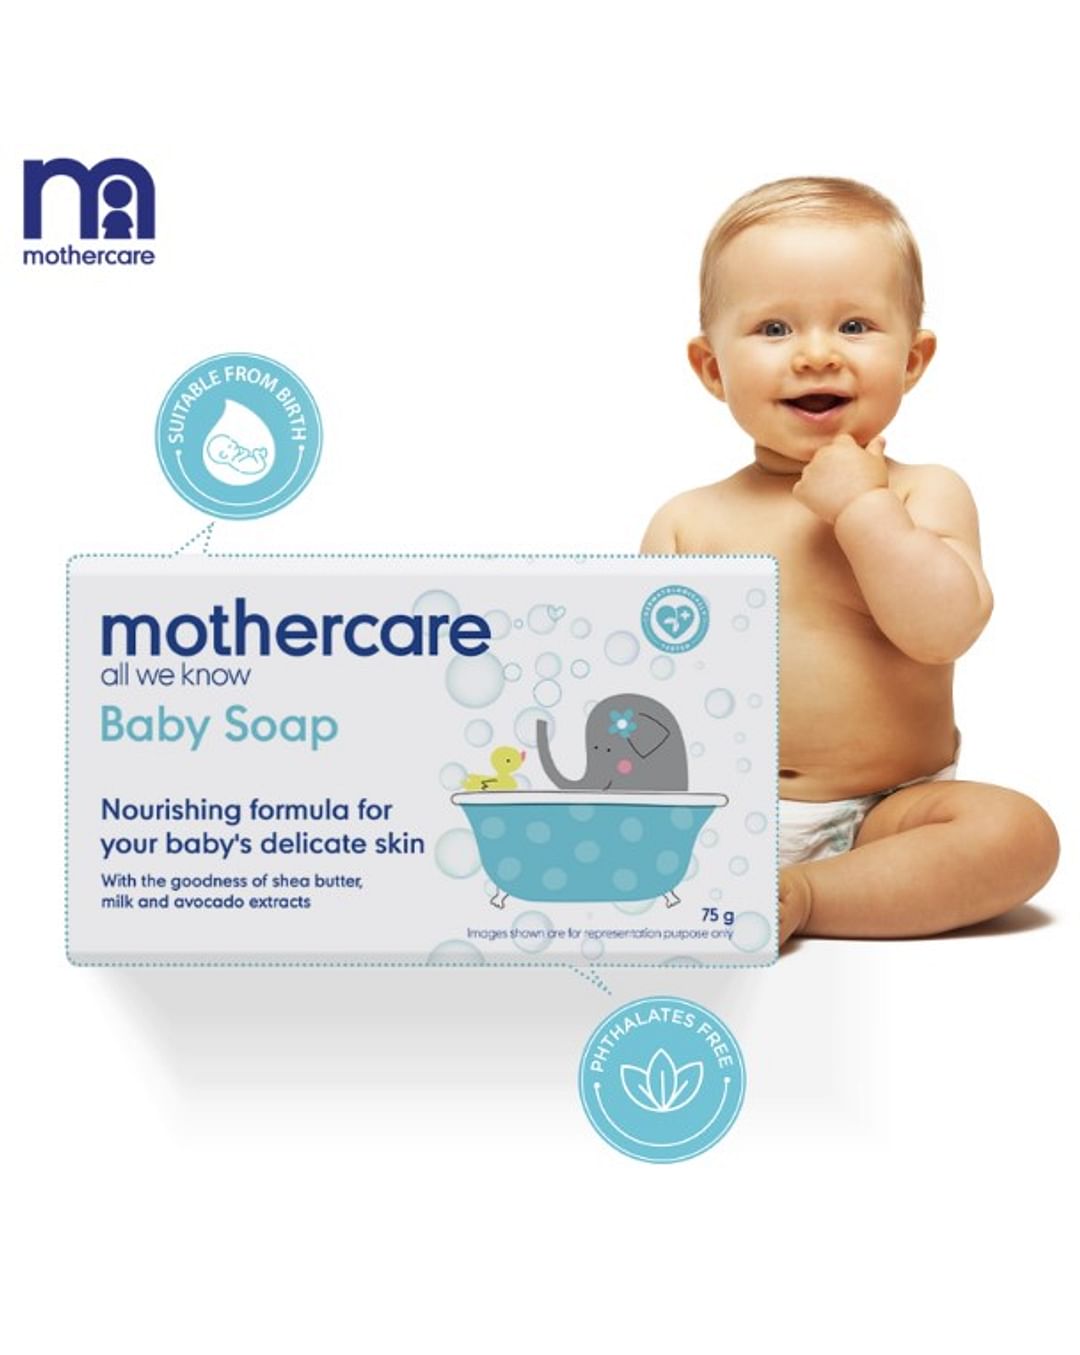 Mothercare provides excellent online services